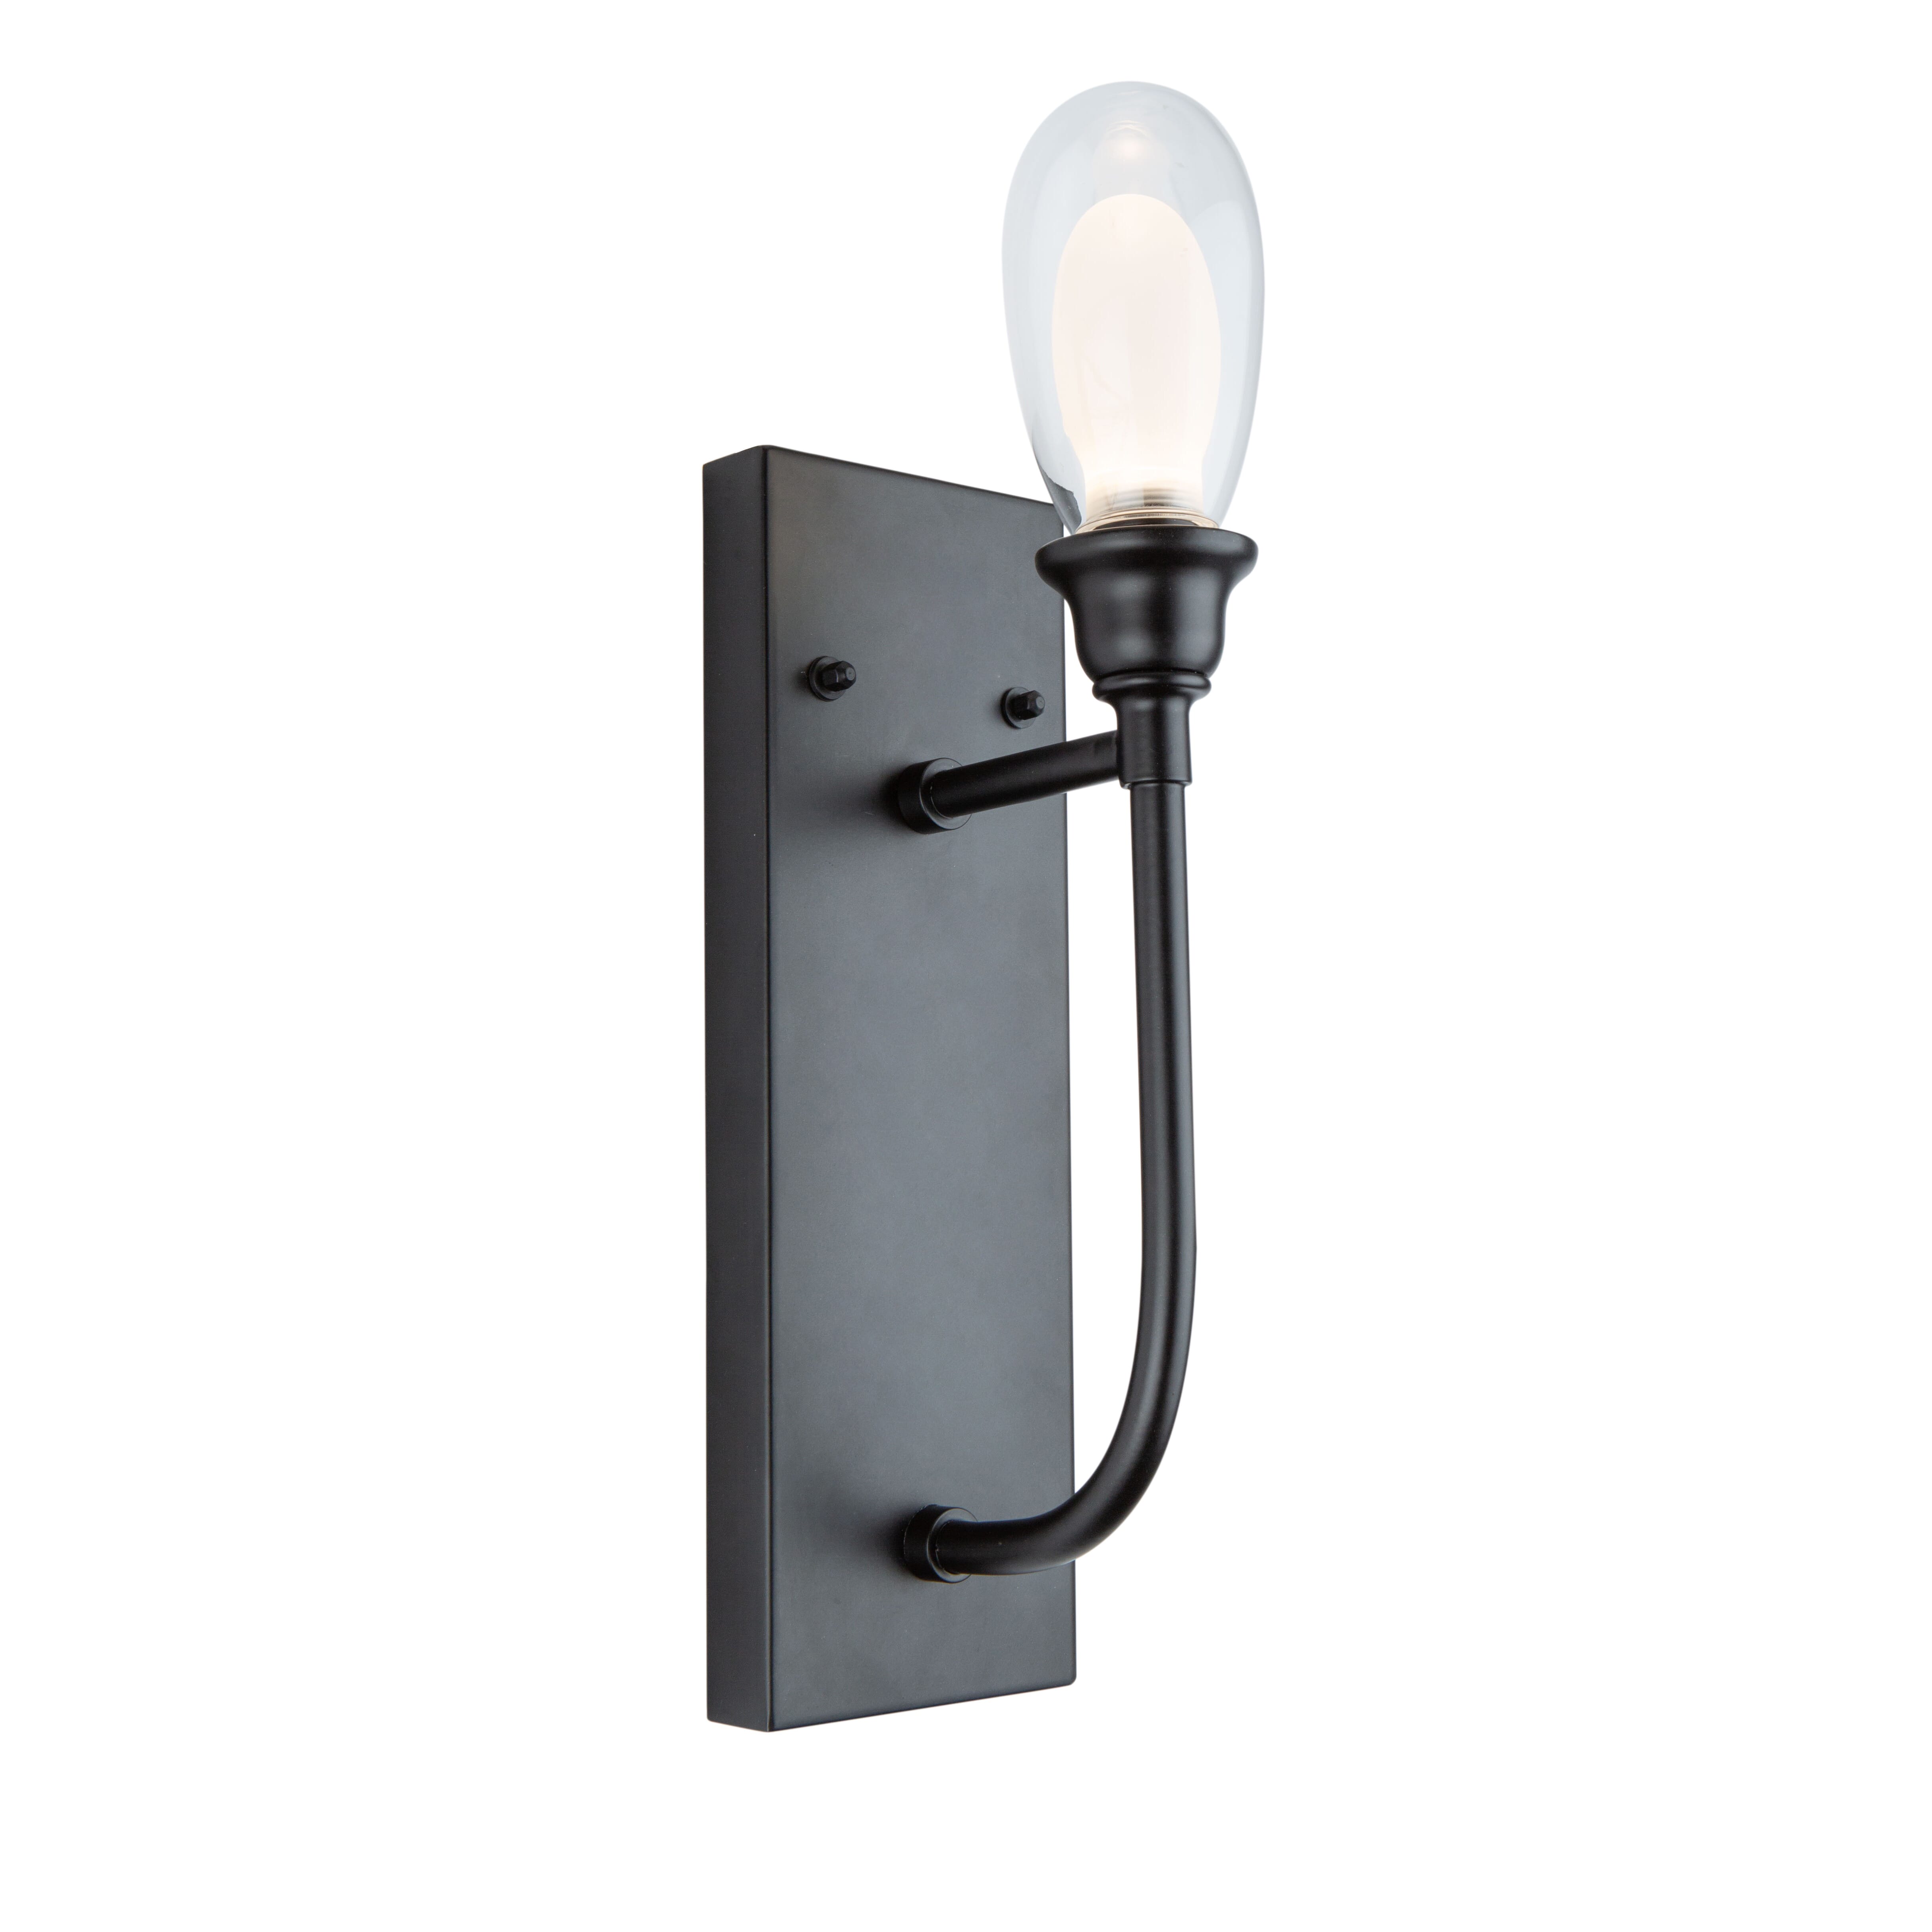 Artcraft Bimini LED Outdoor Wall Light in Black